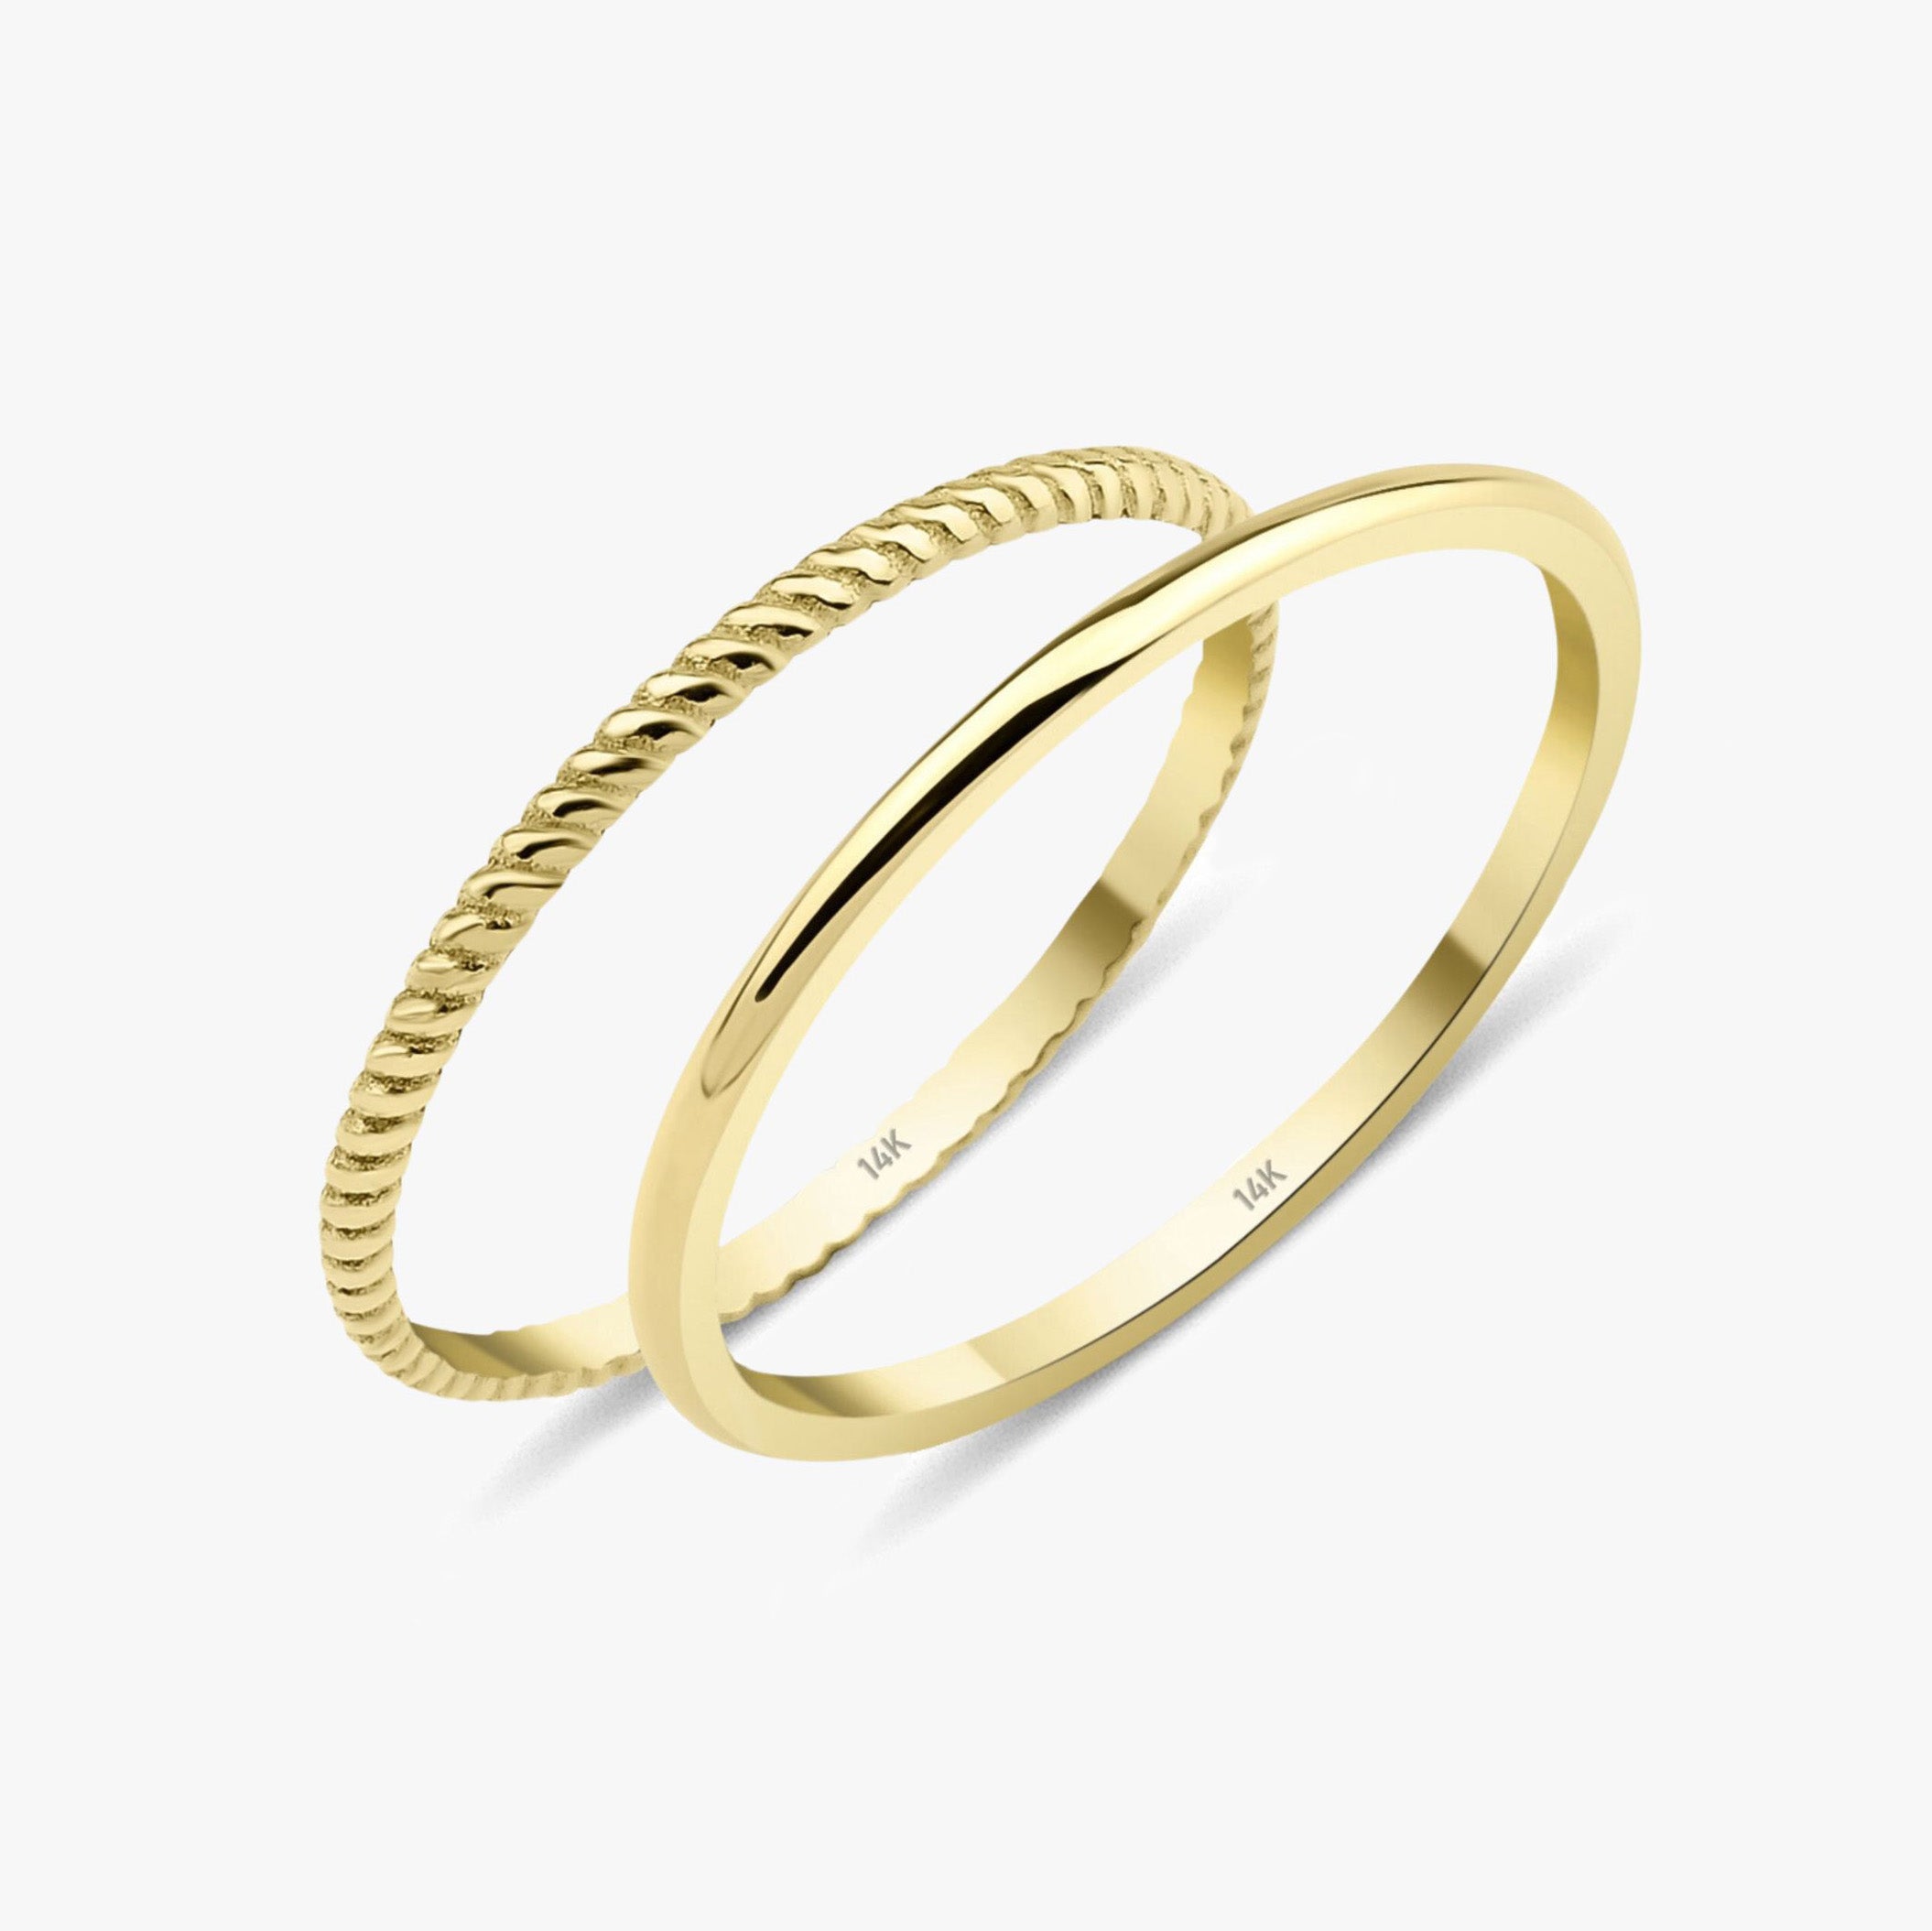 Minimalist Ring Set In 14K Gold